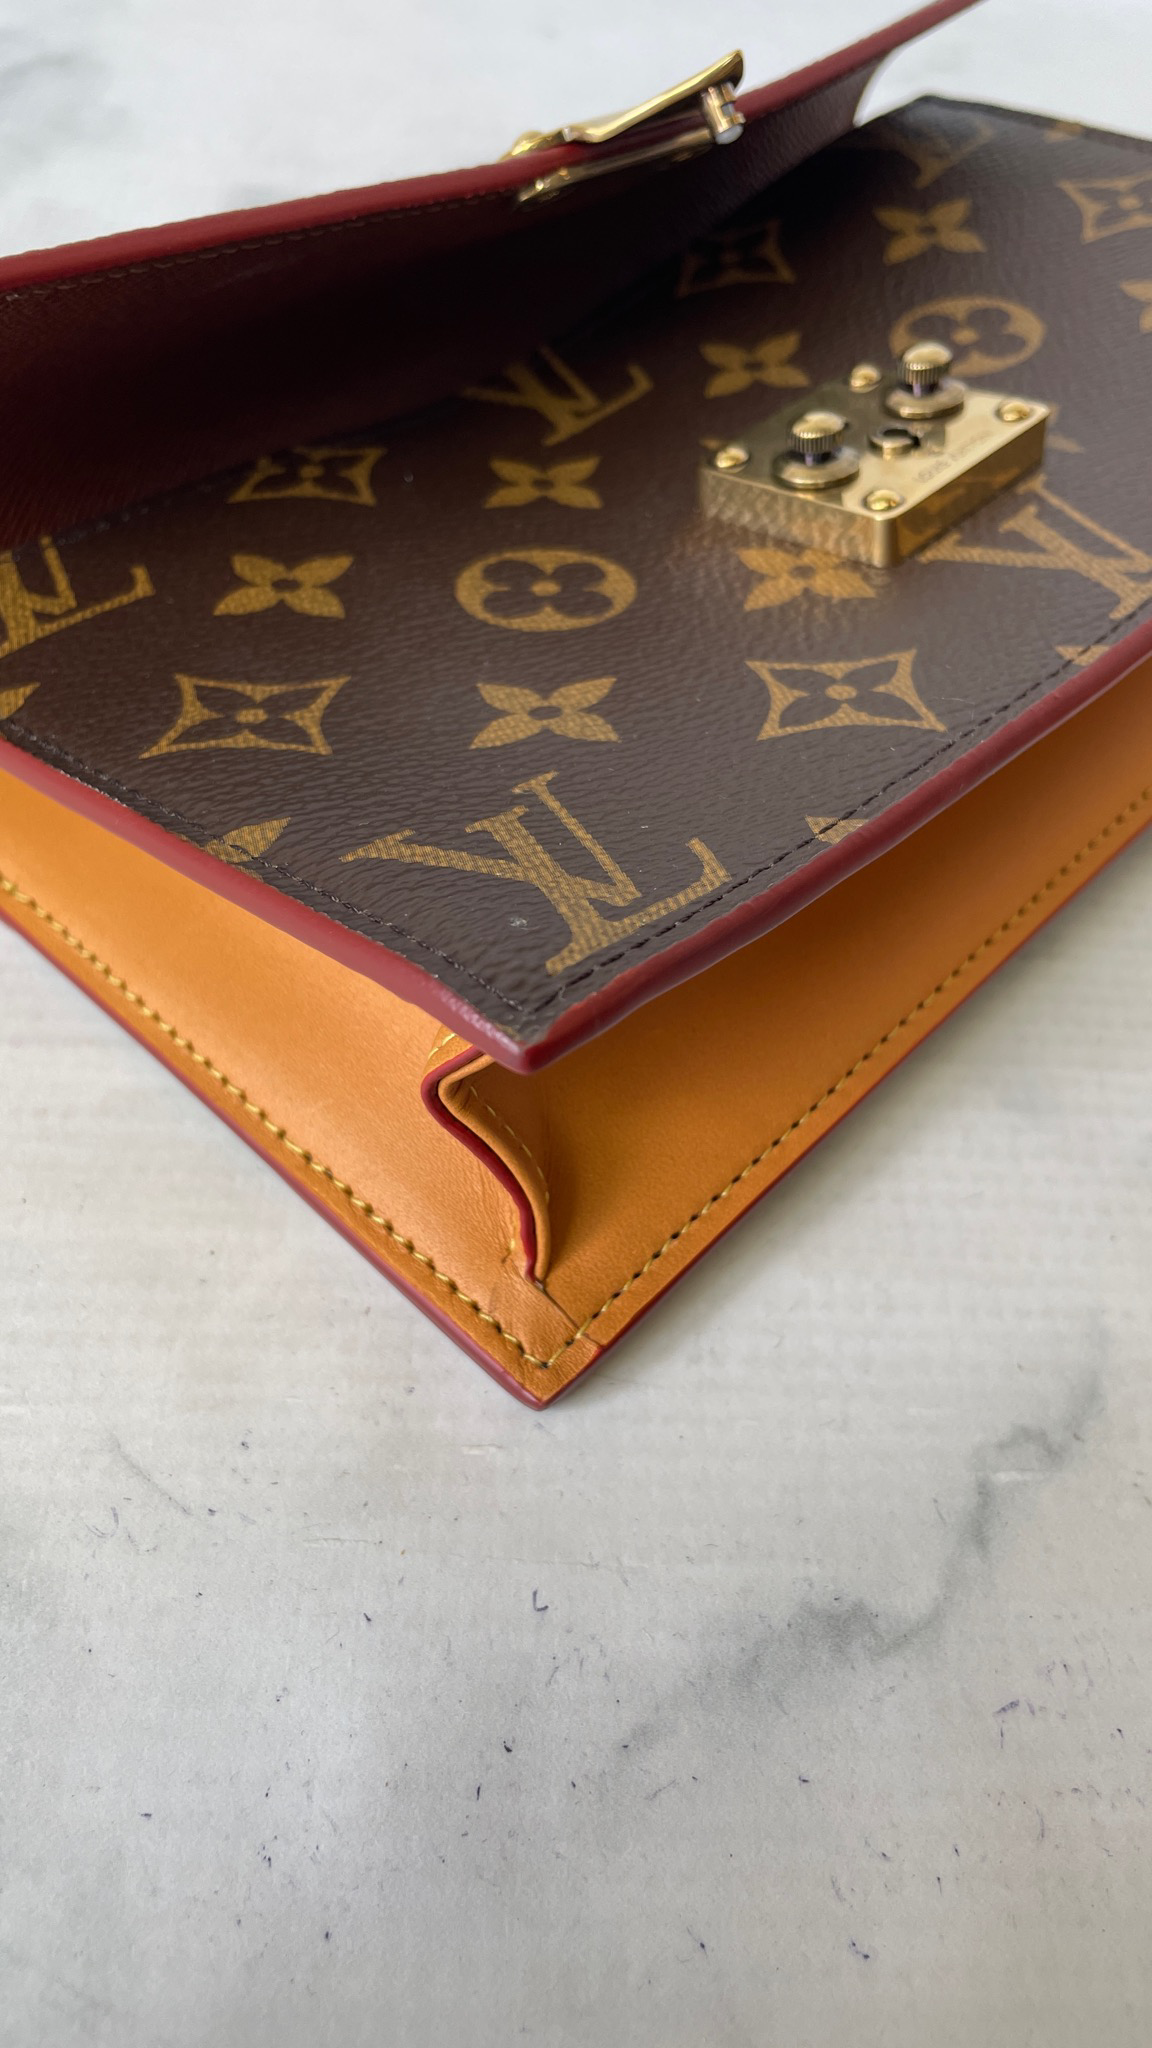 LOUIS VUITTON Louis Vuitton S Lock Slingback Waist Bag M45864